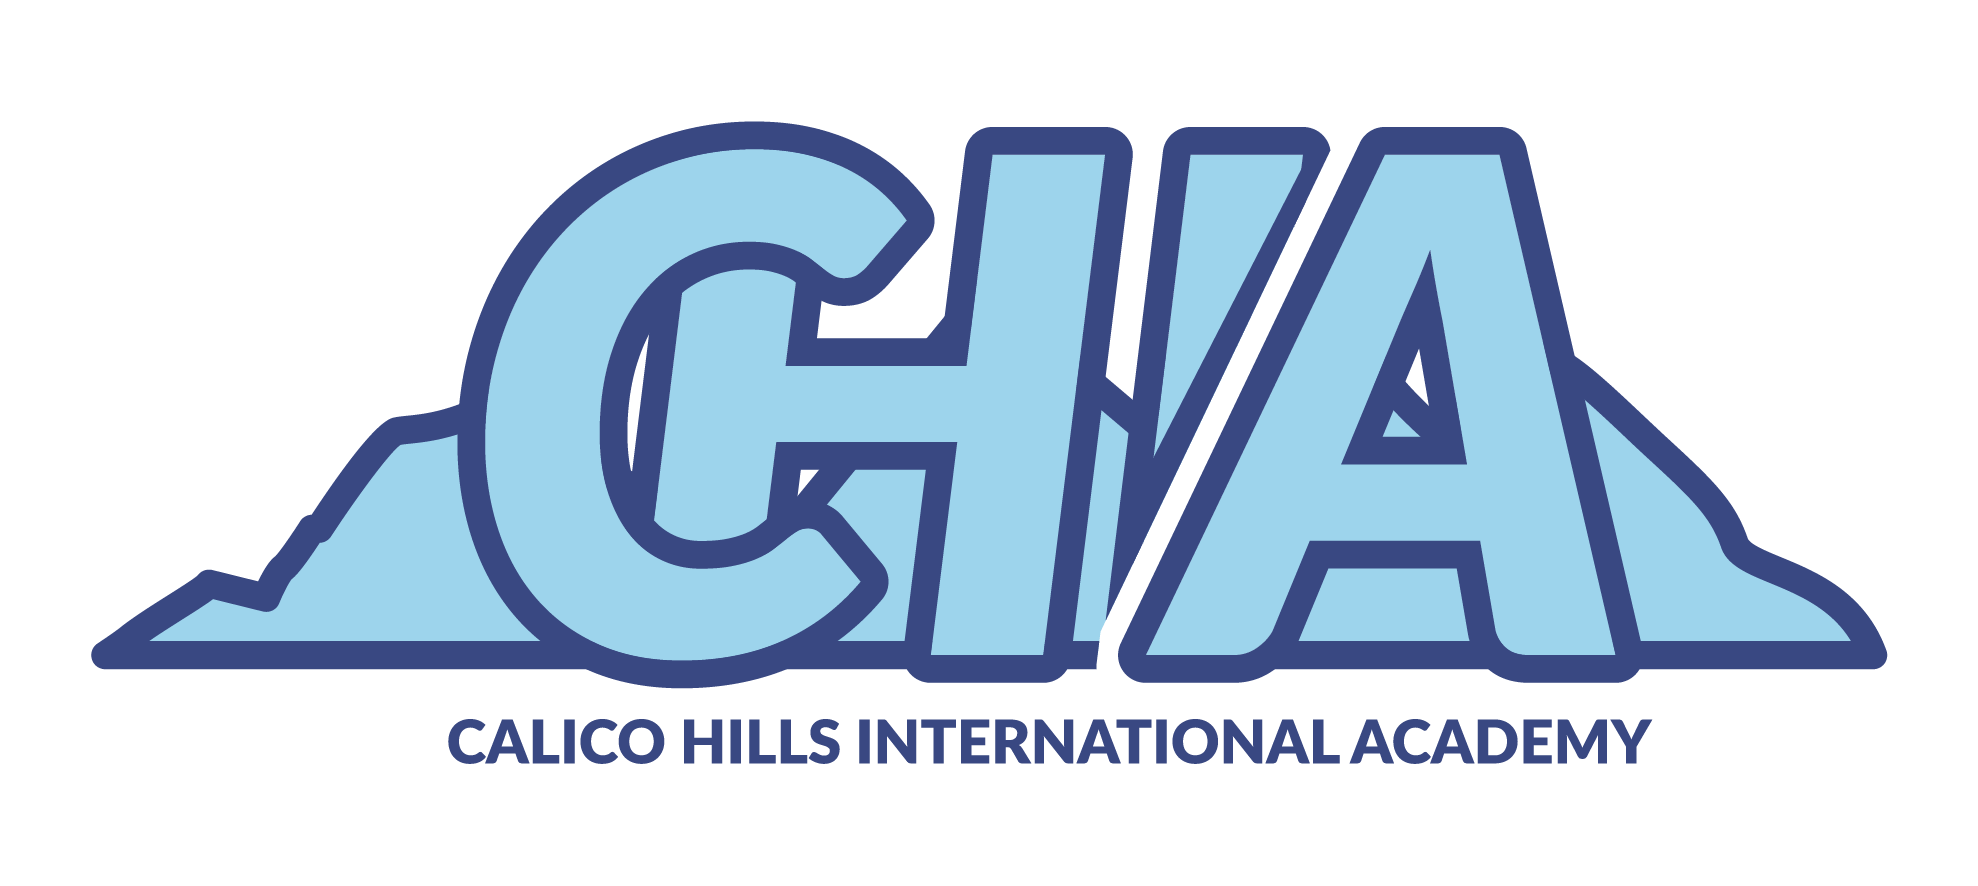 Calico Hills International Academy